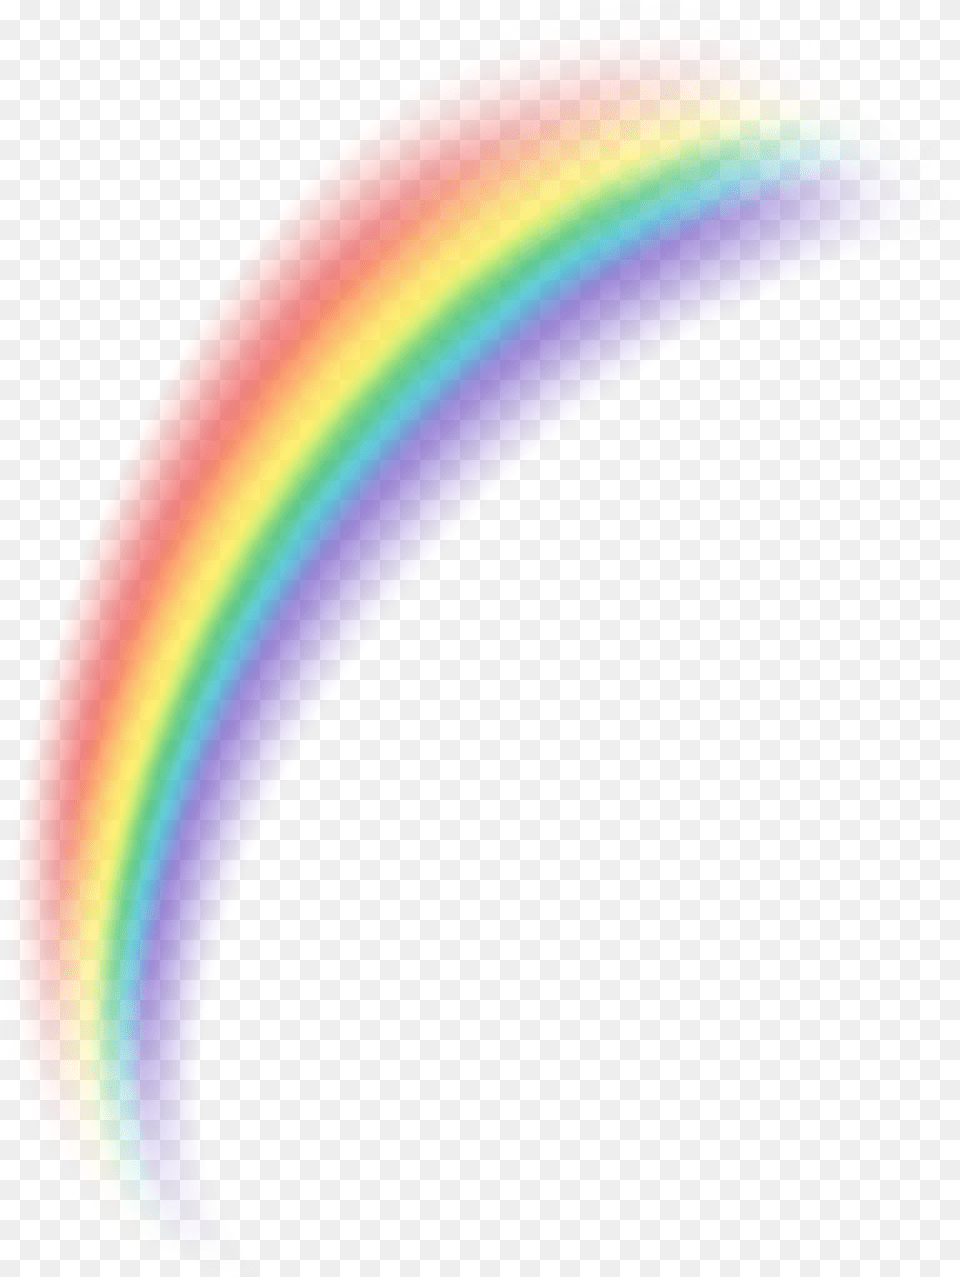 Rainbow Image Clip Art Rainbow Arco Iris Picsart, Nature, Night, Outdoors, Sky Free Transparent Png